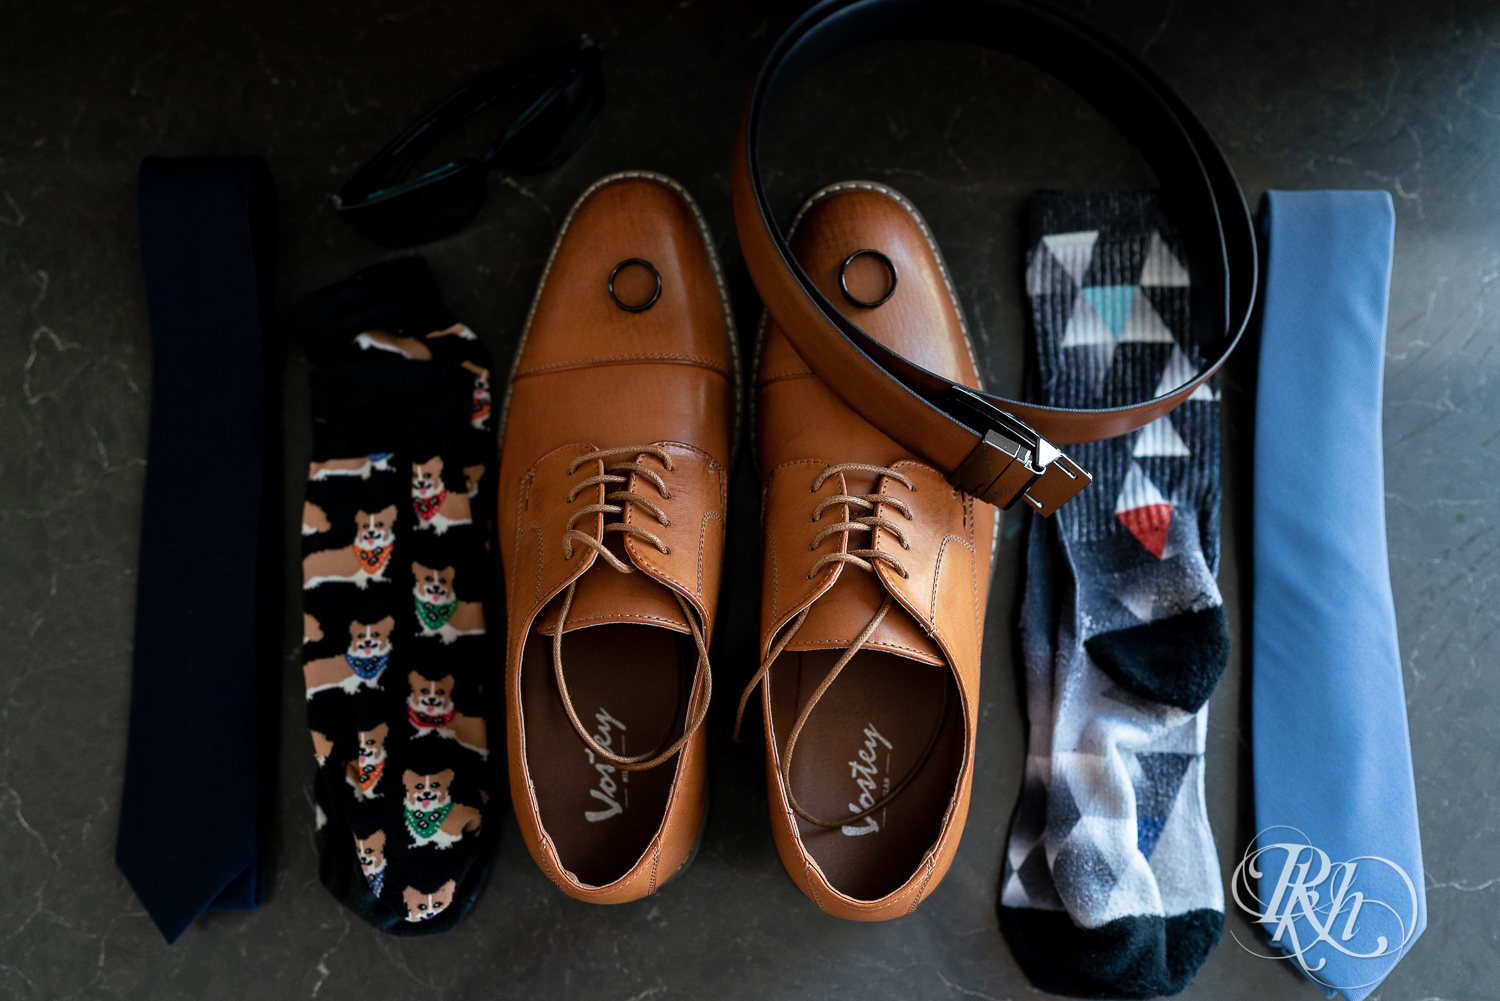 Men's wedding details including shoes, socks, tie and Corgi socks. 